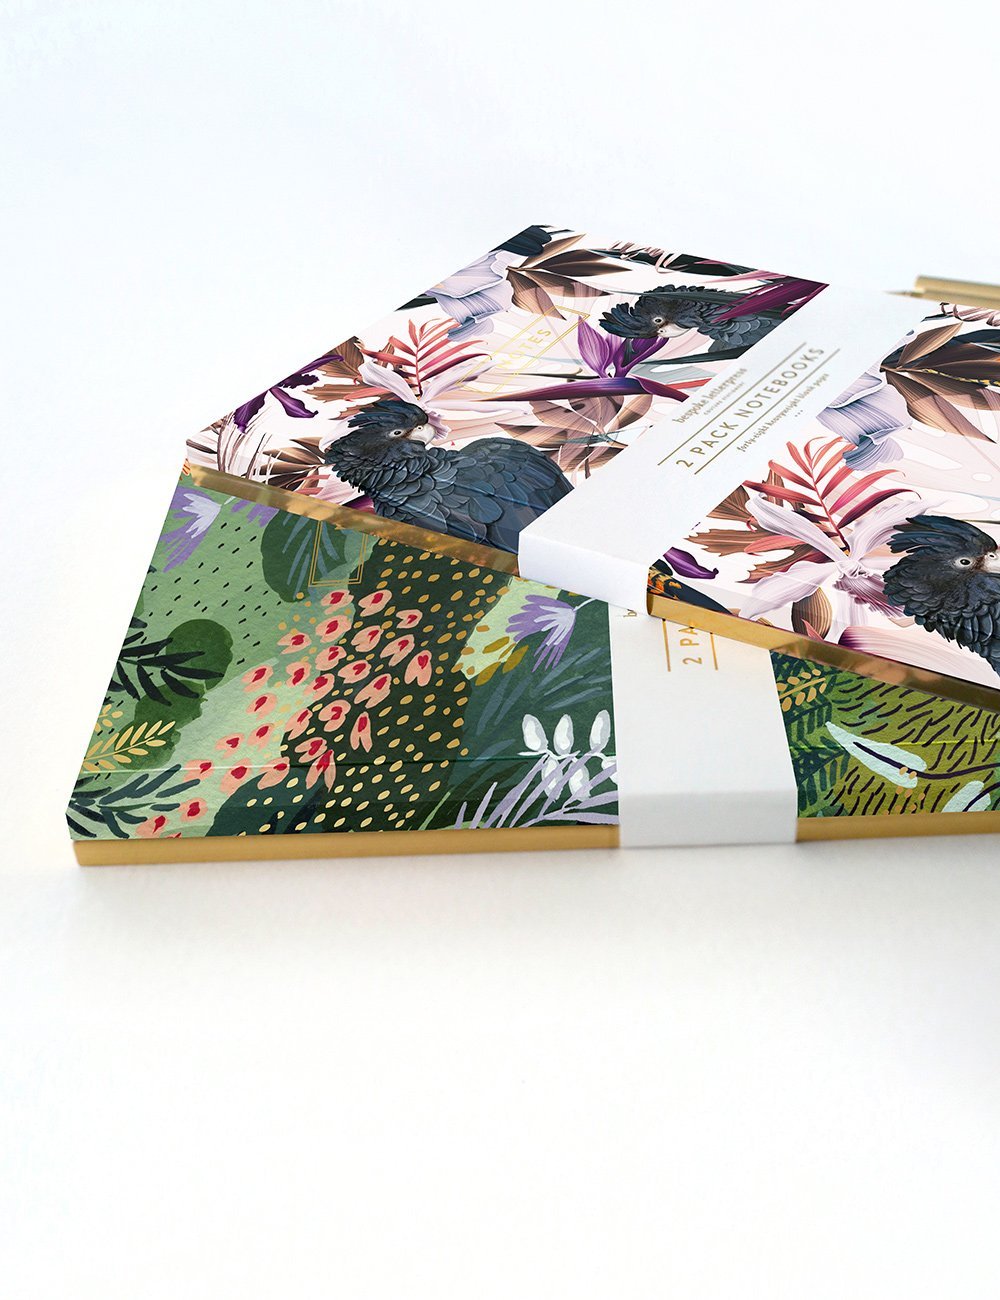 Bespoke Letterpress- 2 Pack Notebooks- Jungle